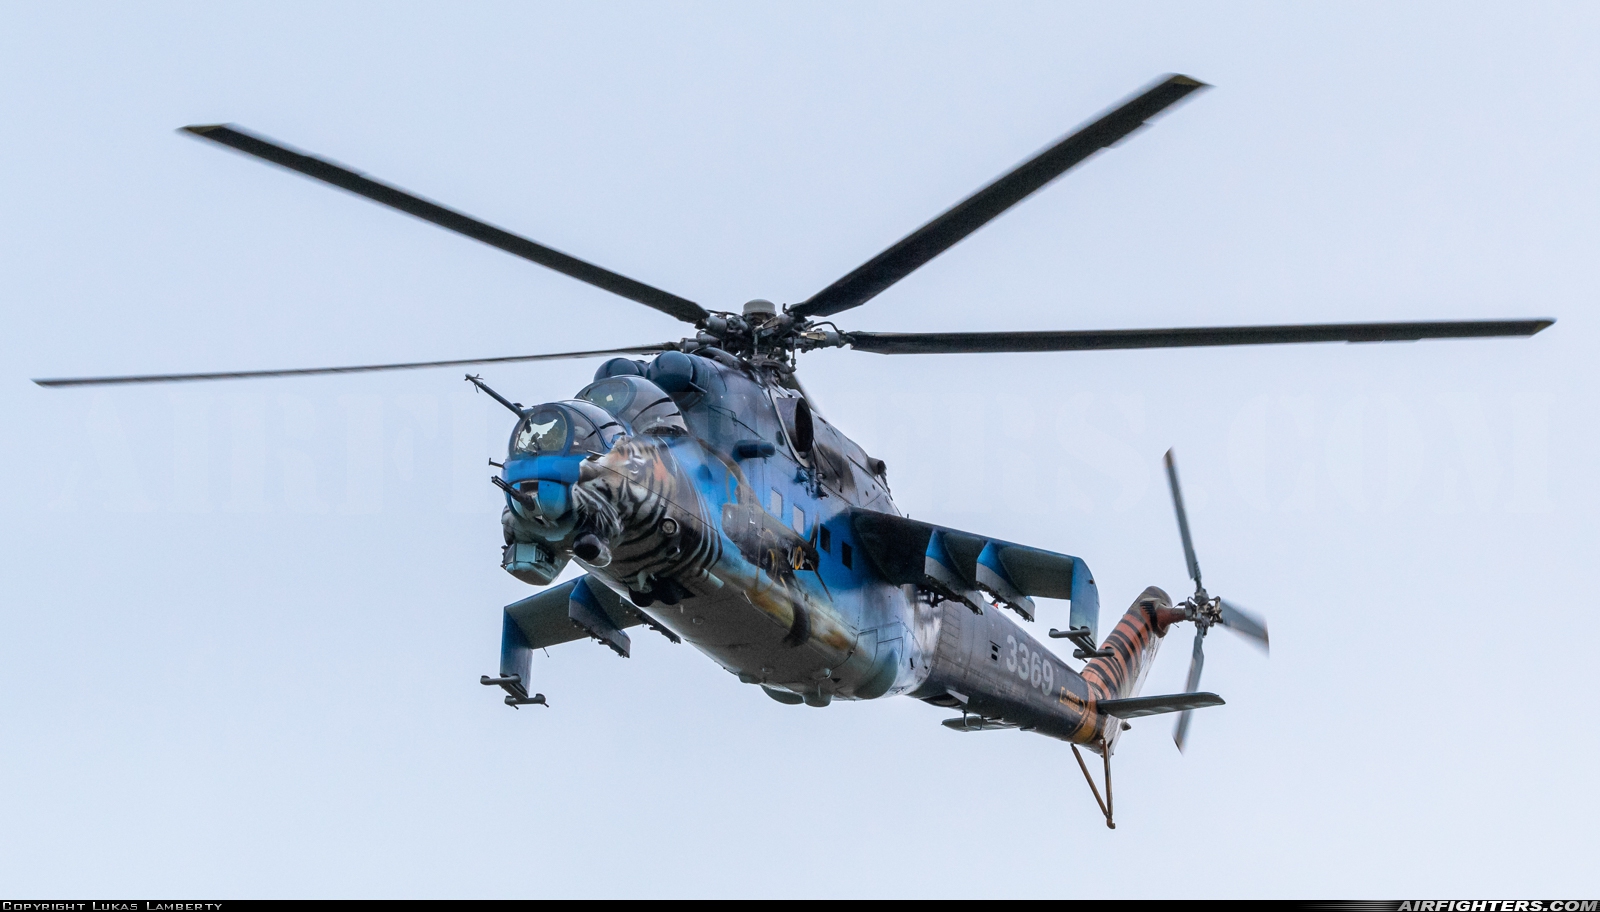 Czech Republic - Air Force Mil Mi-35 (Mi-24V) 3369 at Kleine Brogel (EBBL), Belgium